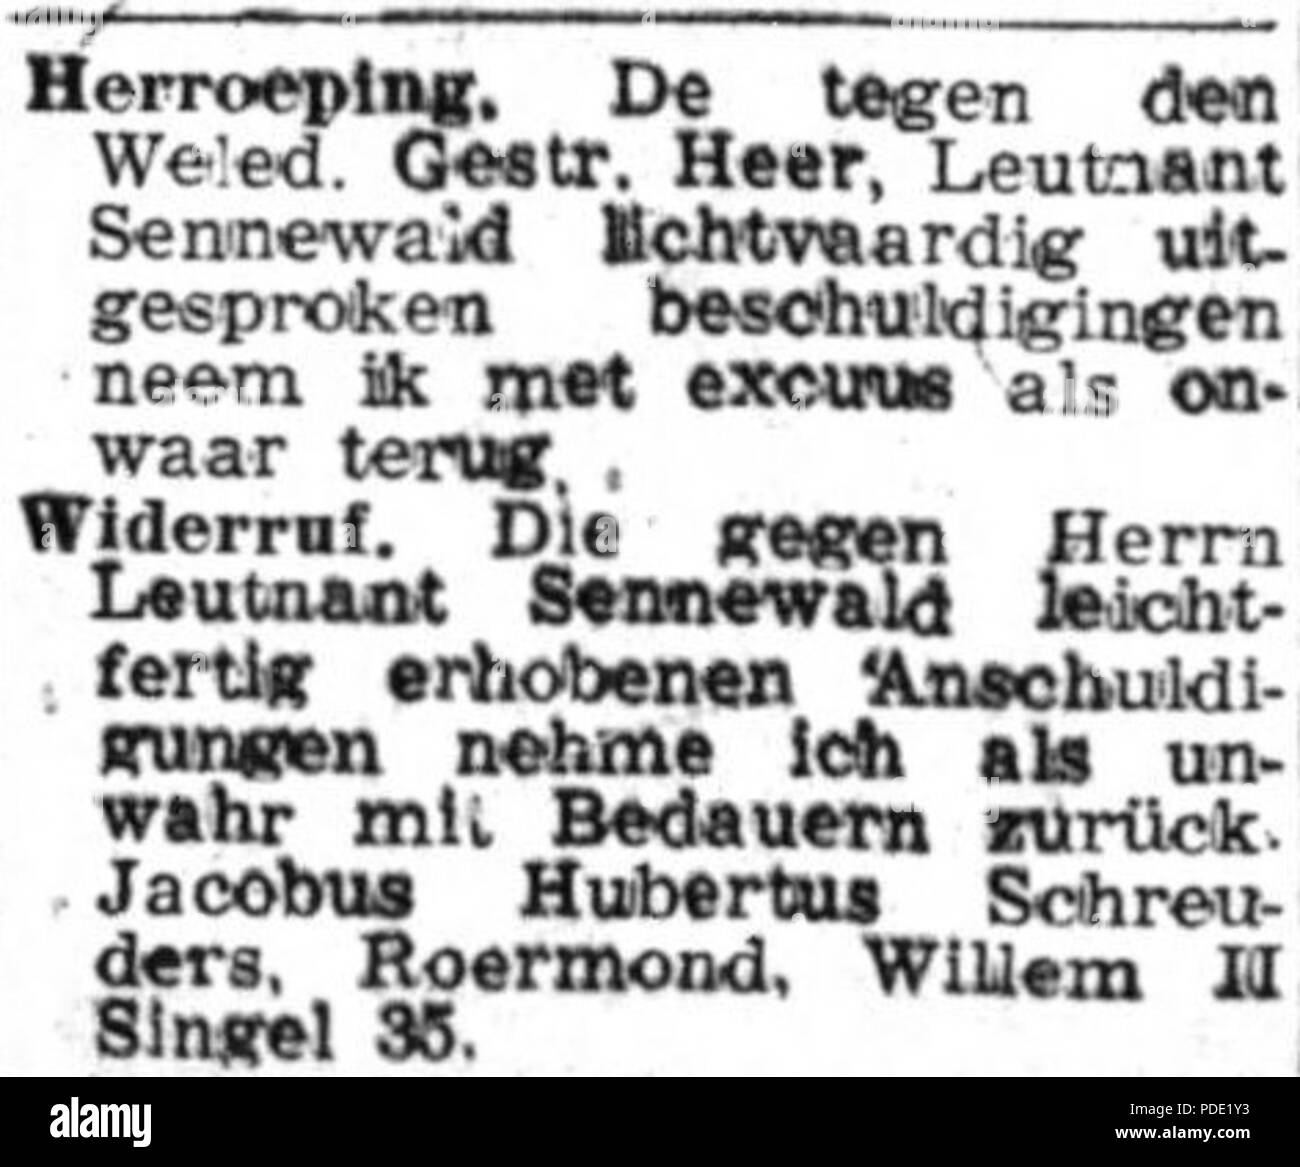 111 Deutsche Zeitung in den Niederlanden vol 003 no 314 Herroeping Stock Photo